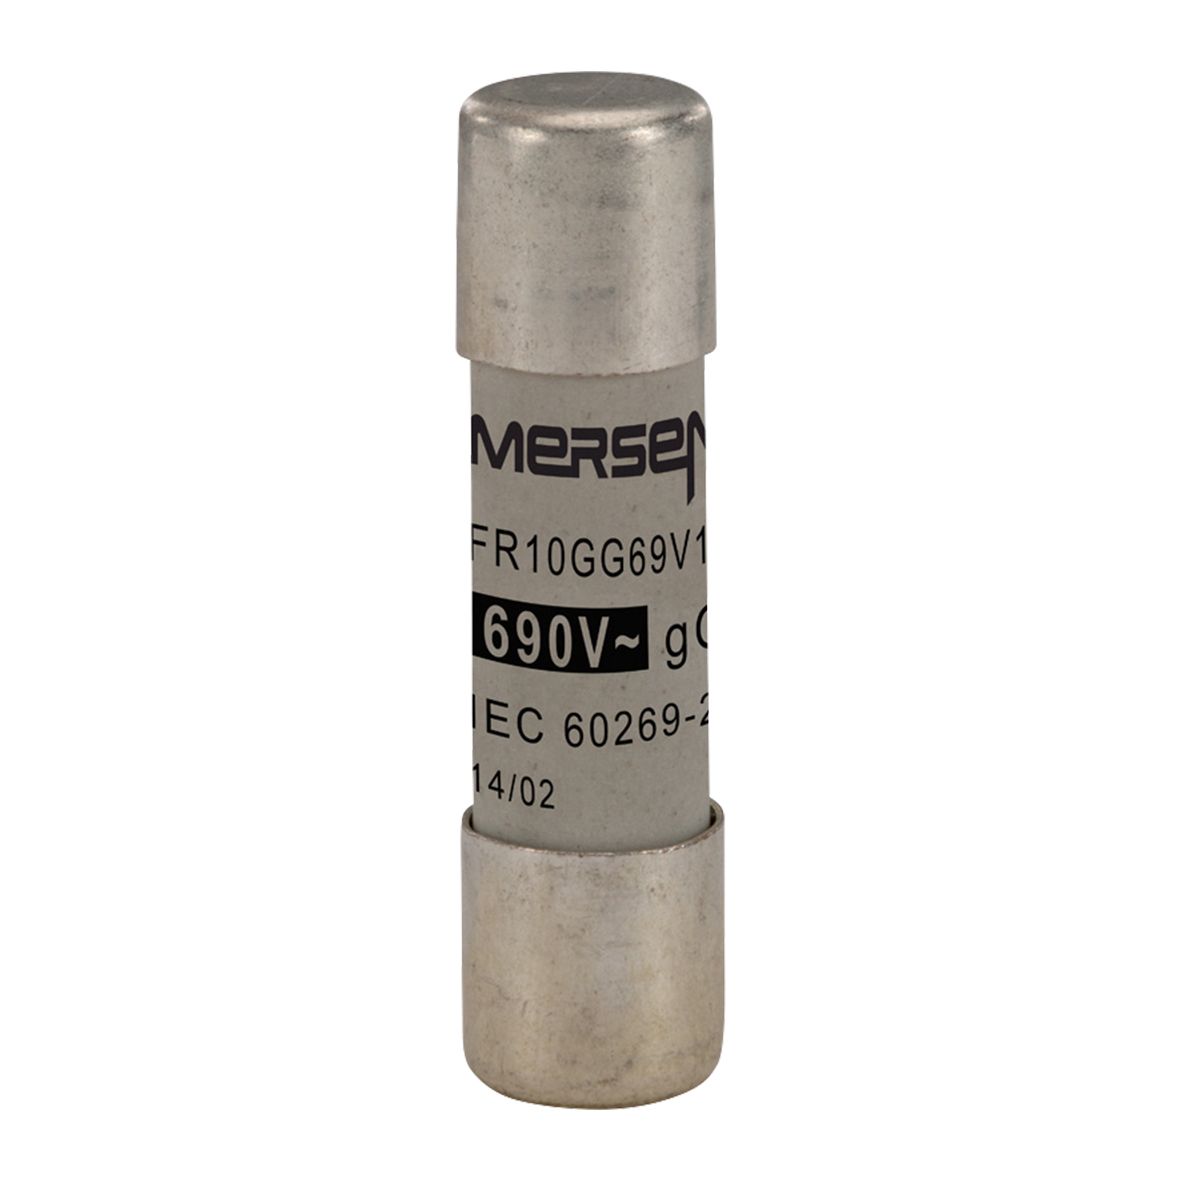 R302787 - Cylindrical fuse-link gG 690VAC 10.3x38, 1A